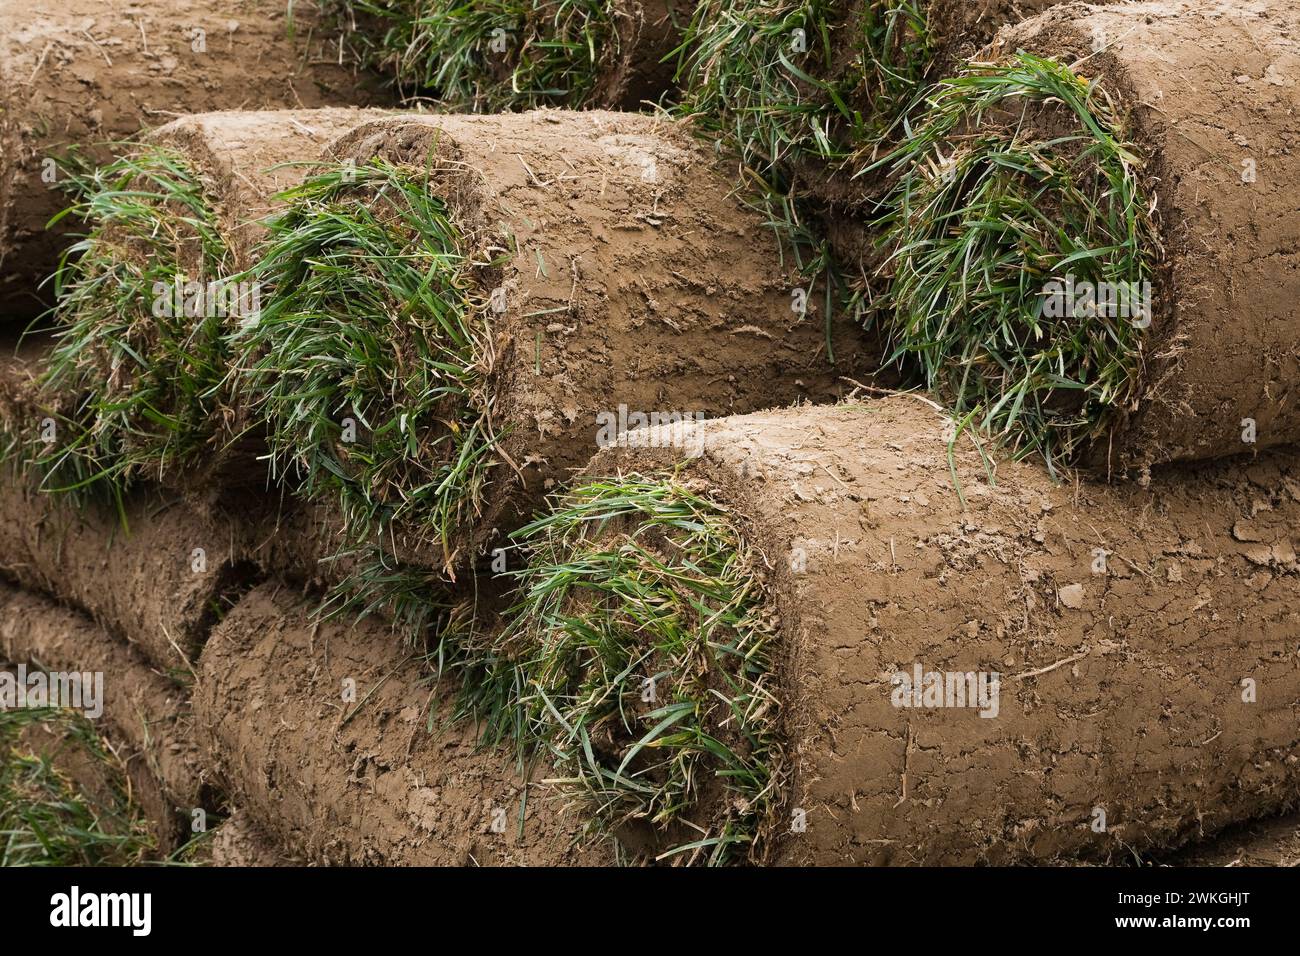 Stacked rolls of Poa pratensis - Kentucky bluegrass sod. Stock Photo